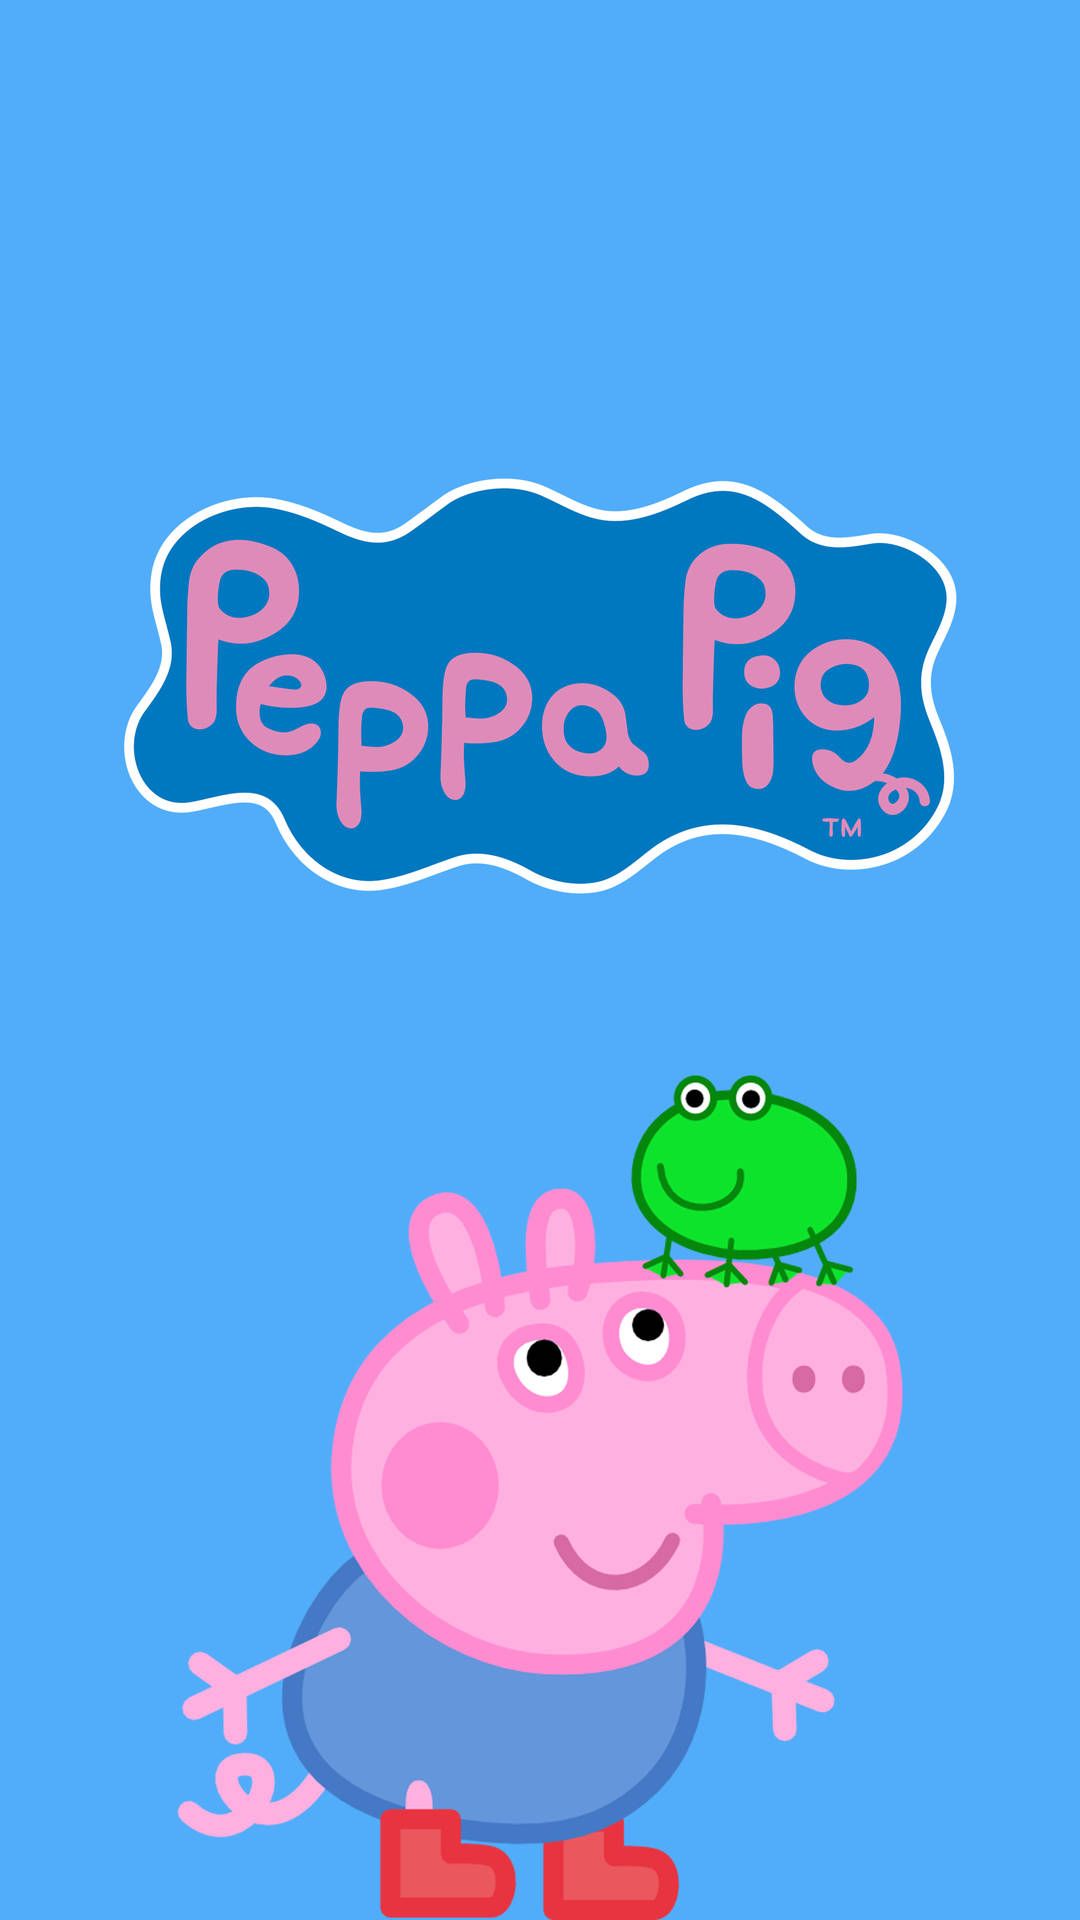 Download Peppa Pig Phone George Frog Logo Wallpaper